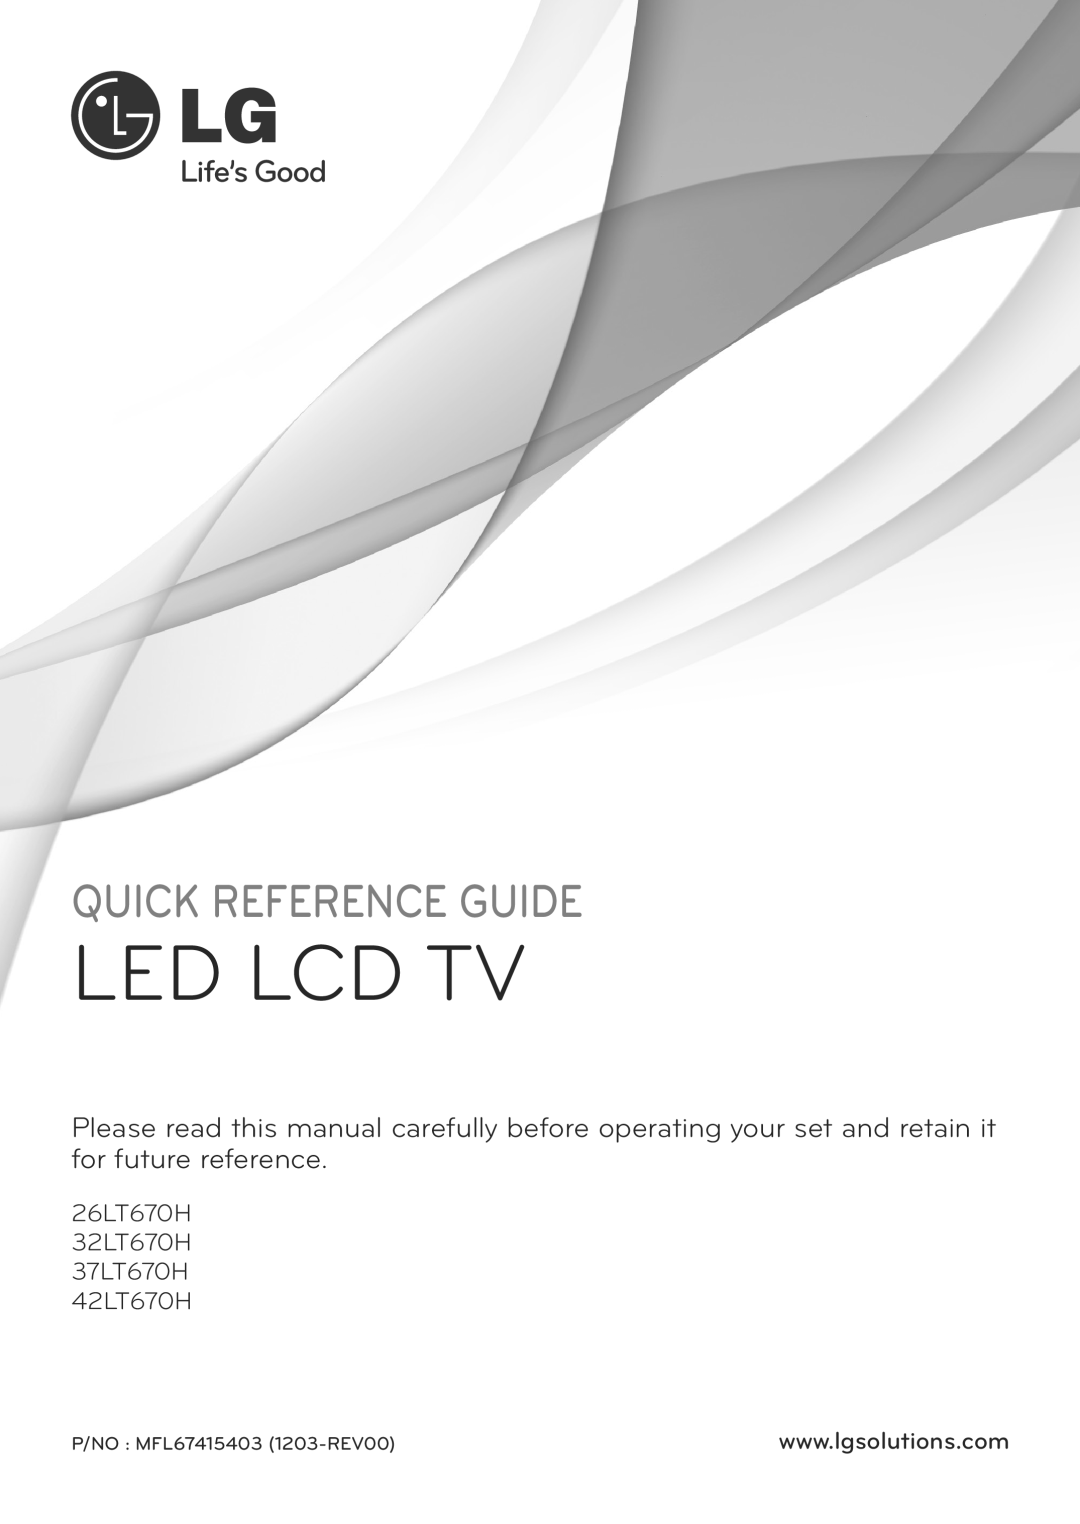 LG Electronics 42LT670H, 55LS675H setup guide Commercial Mode Setup Guide, P/N 206-4213 Rev F, Experienced Installer 